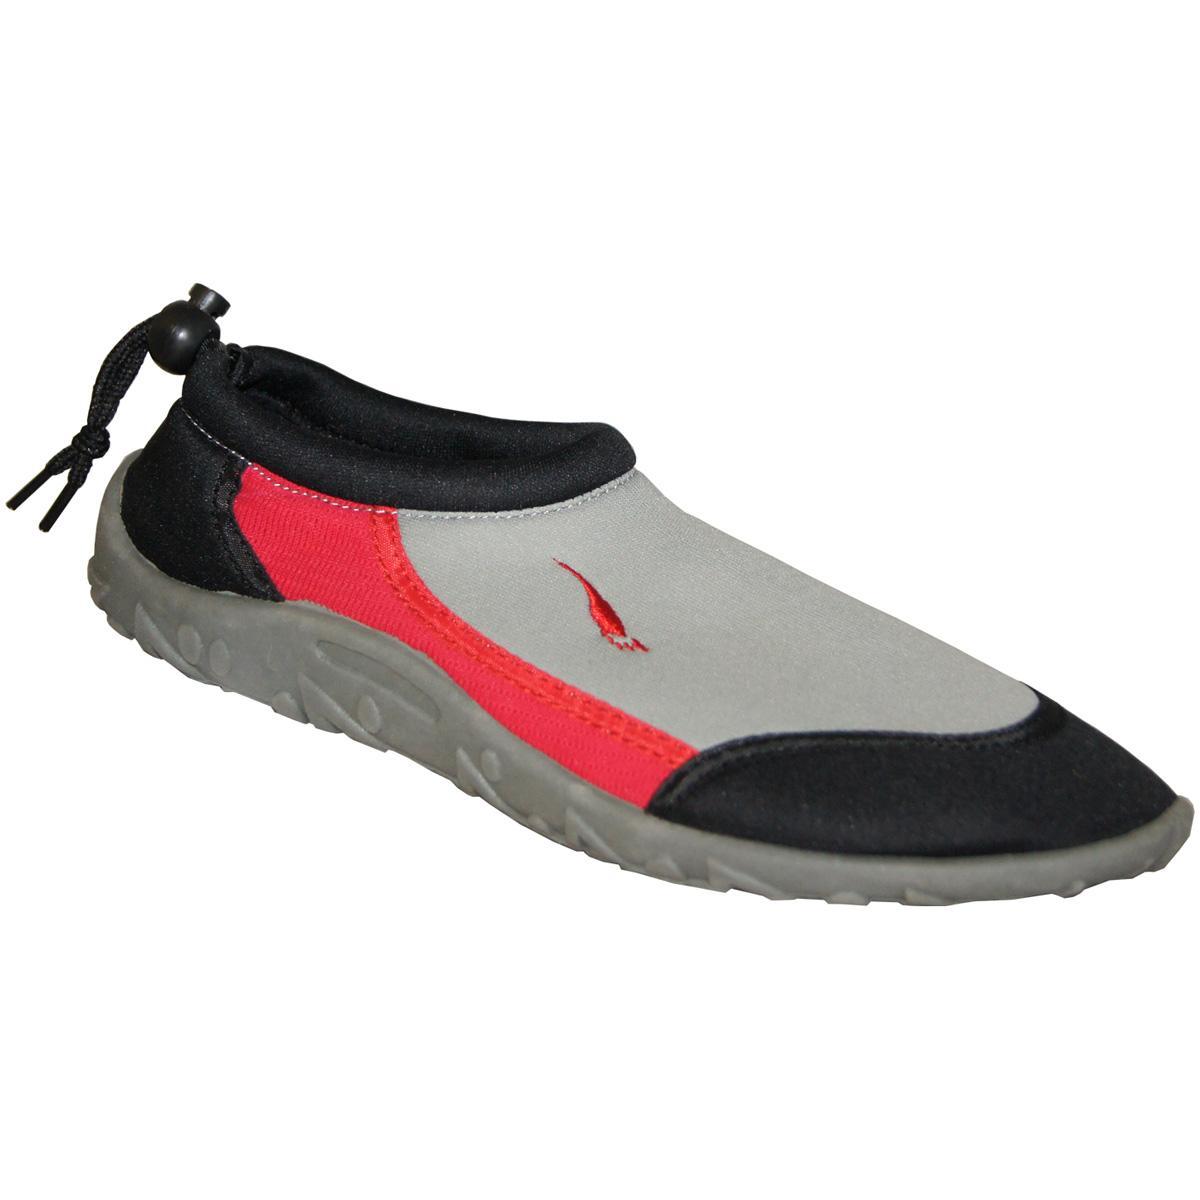 Foto Gumbies Junior/Adult Aqua Shoes Red/Black (Sizes 2-12) foto 554859